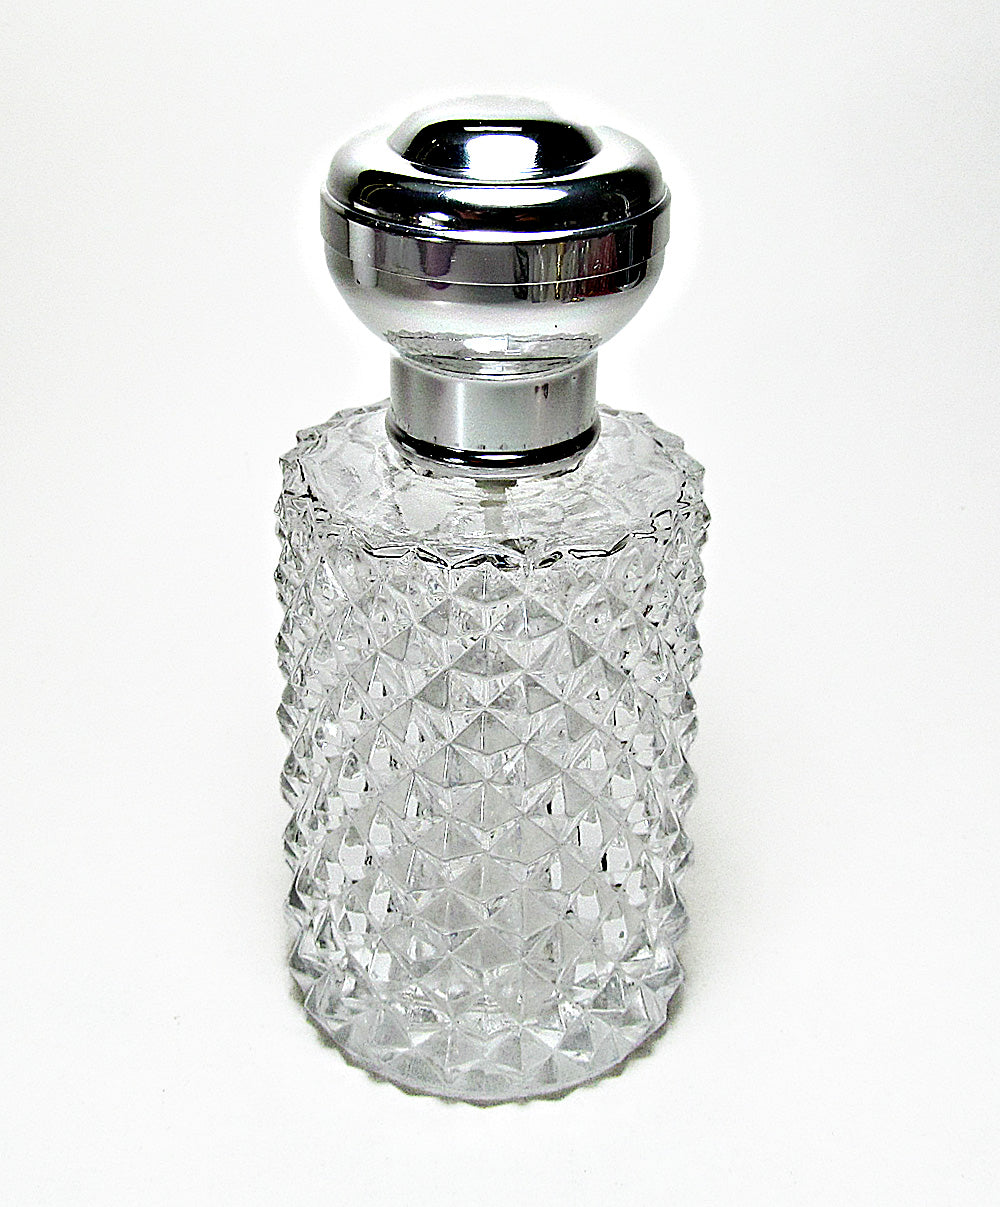 Vintage perfume bottle for men